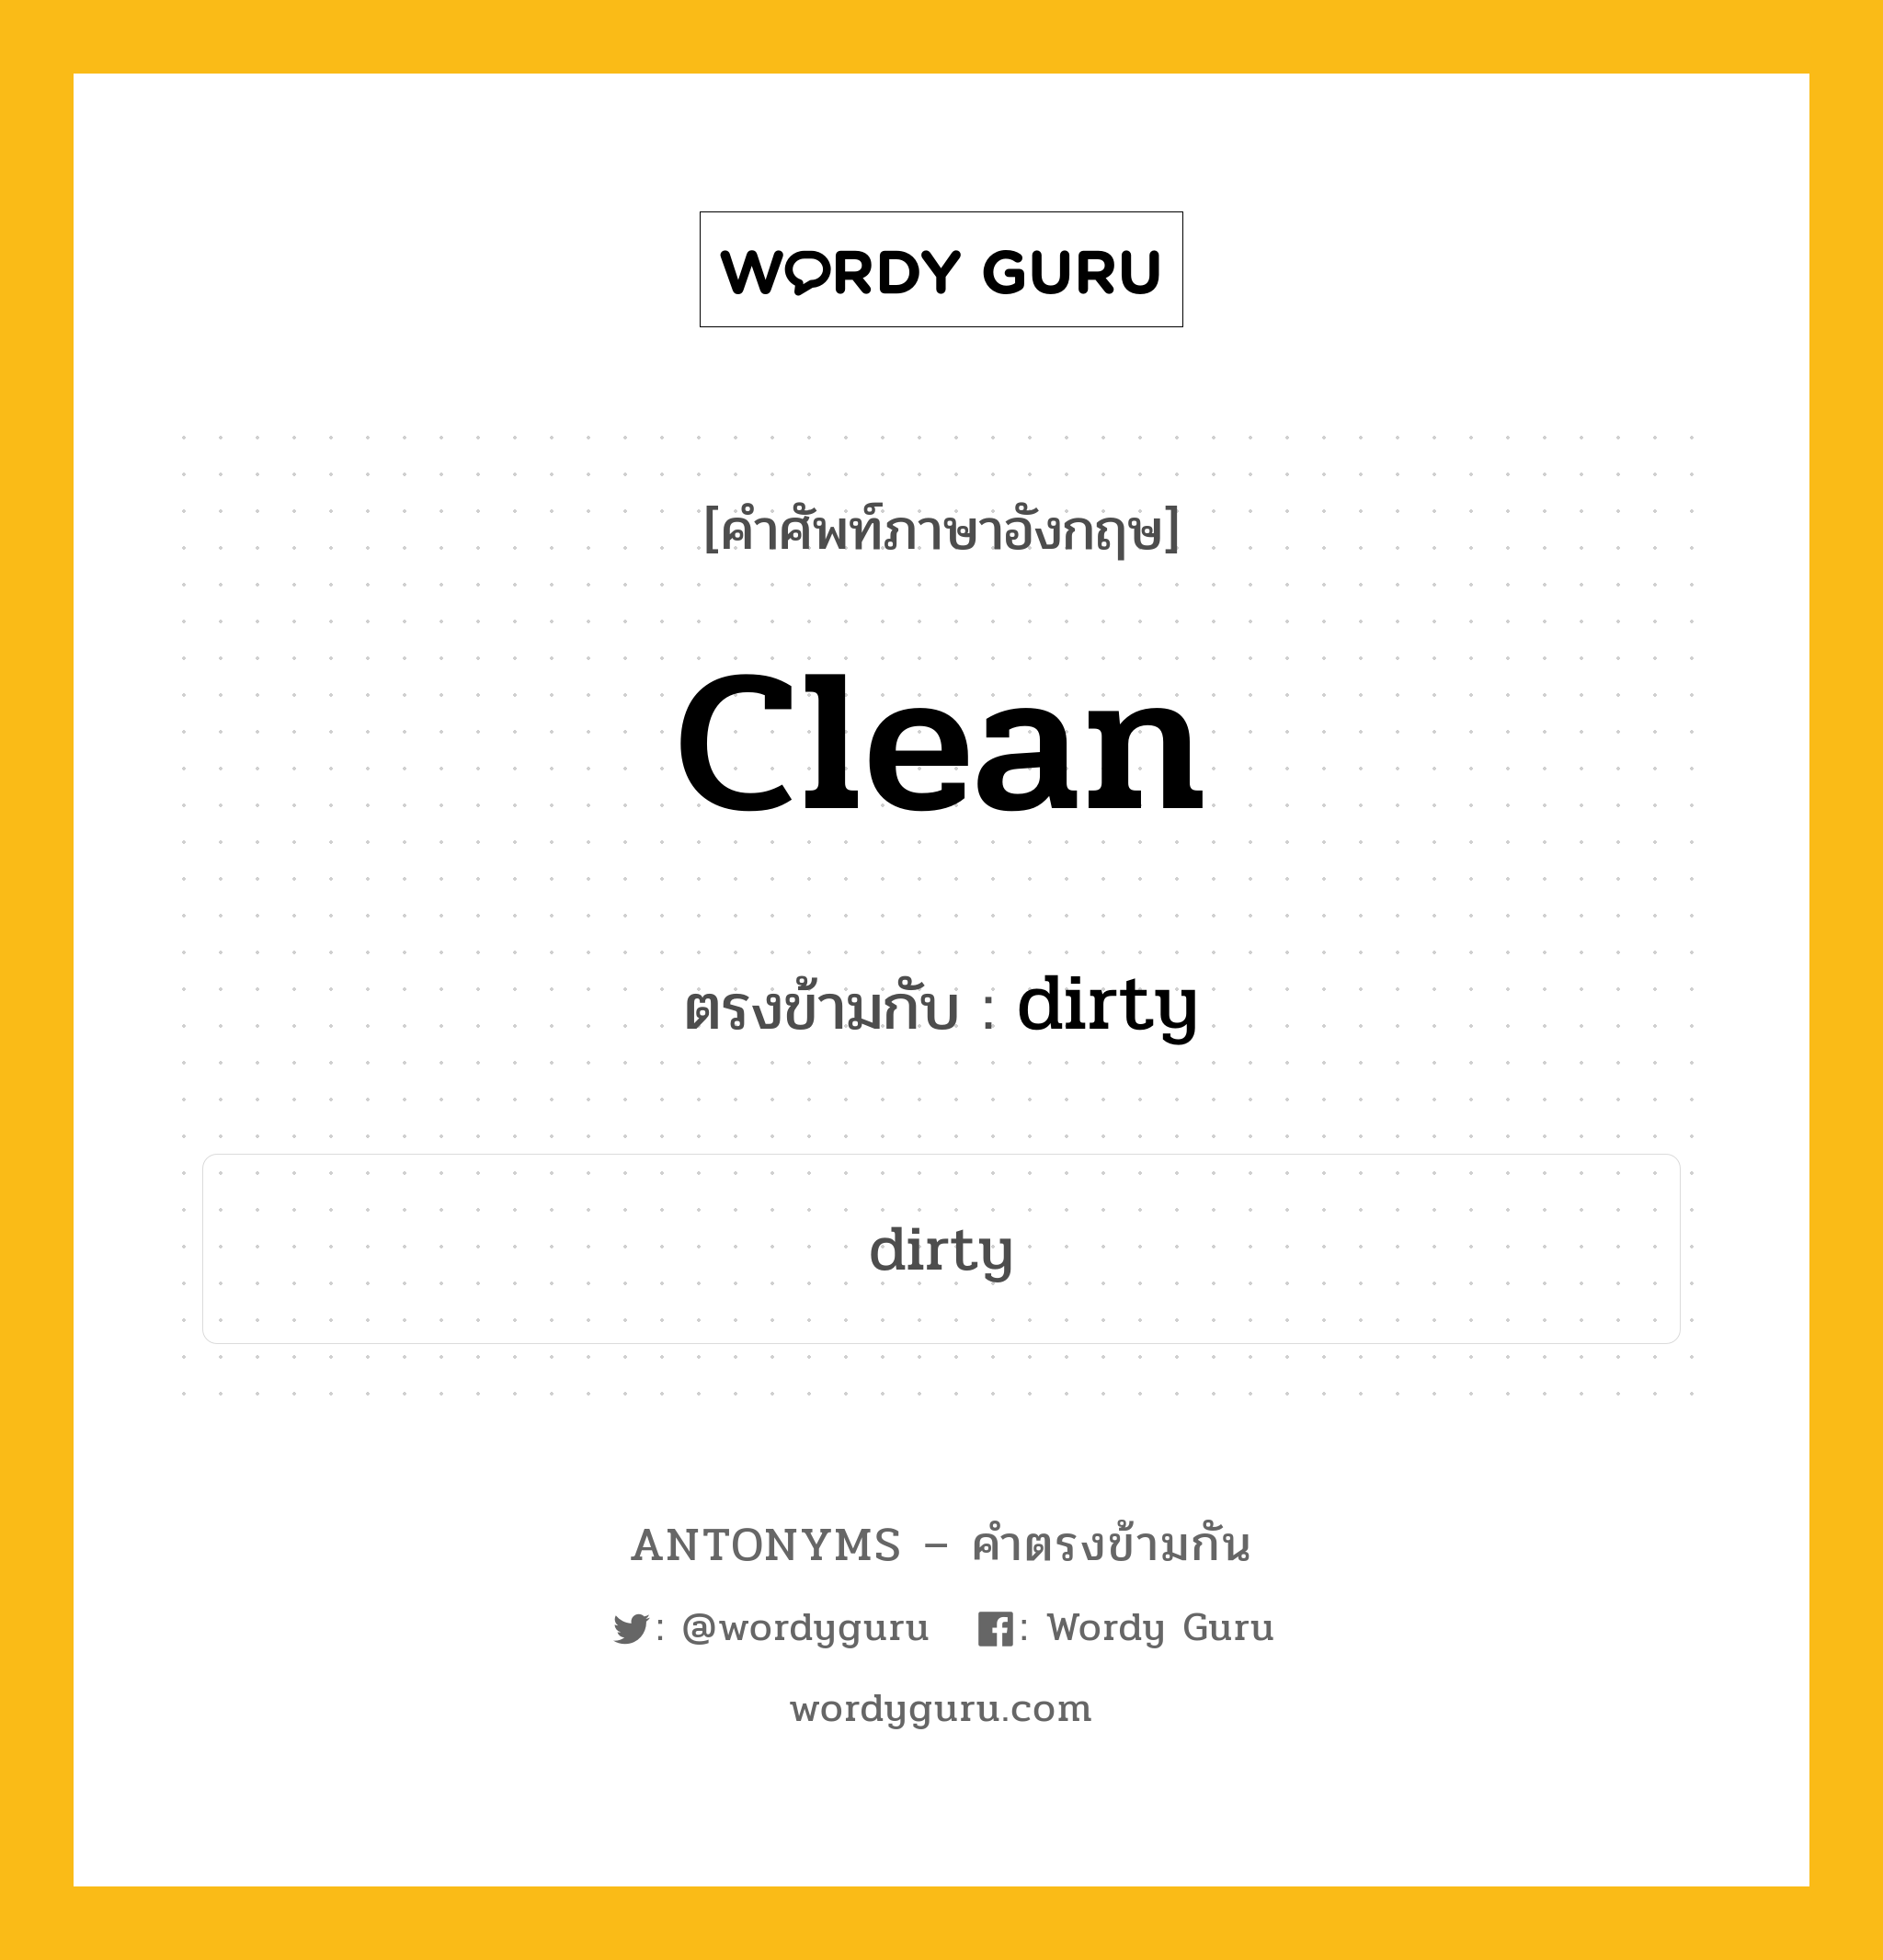 clean เป็นคำตรงข้ามกับคำไหนบ้าง?, คำศัพท์ภาษาอังกฤษ clean ตรงข้ามกับ dirty หมวด dirty